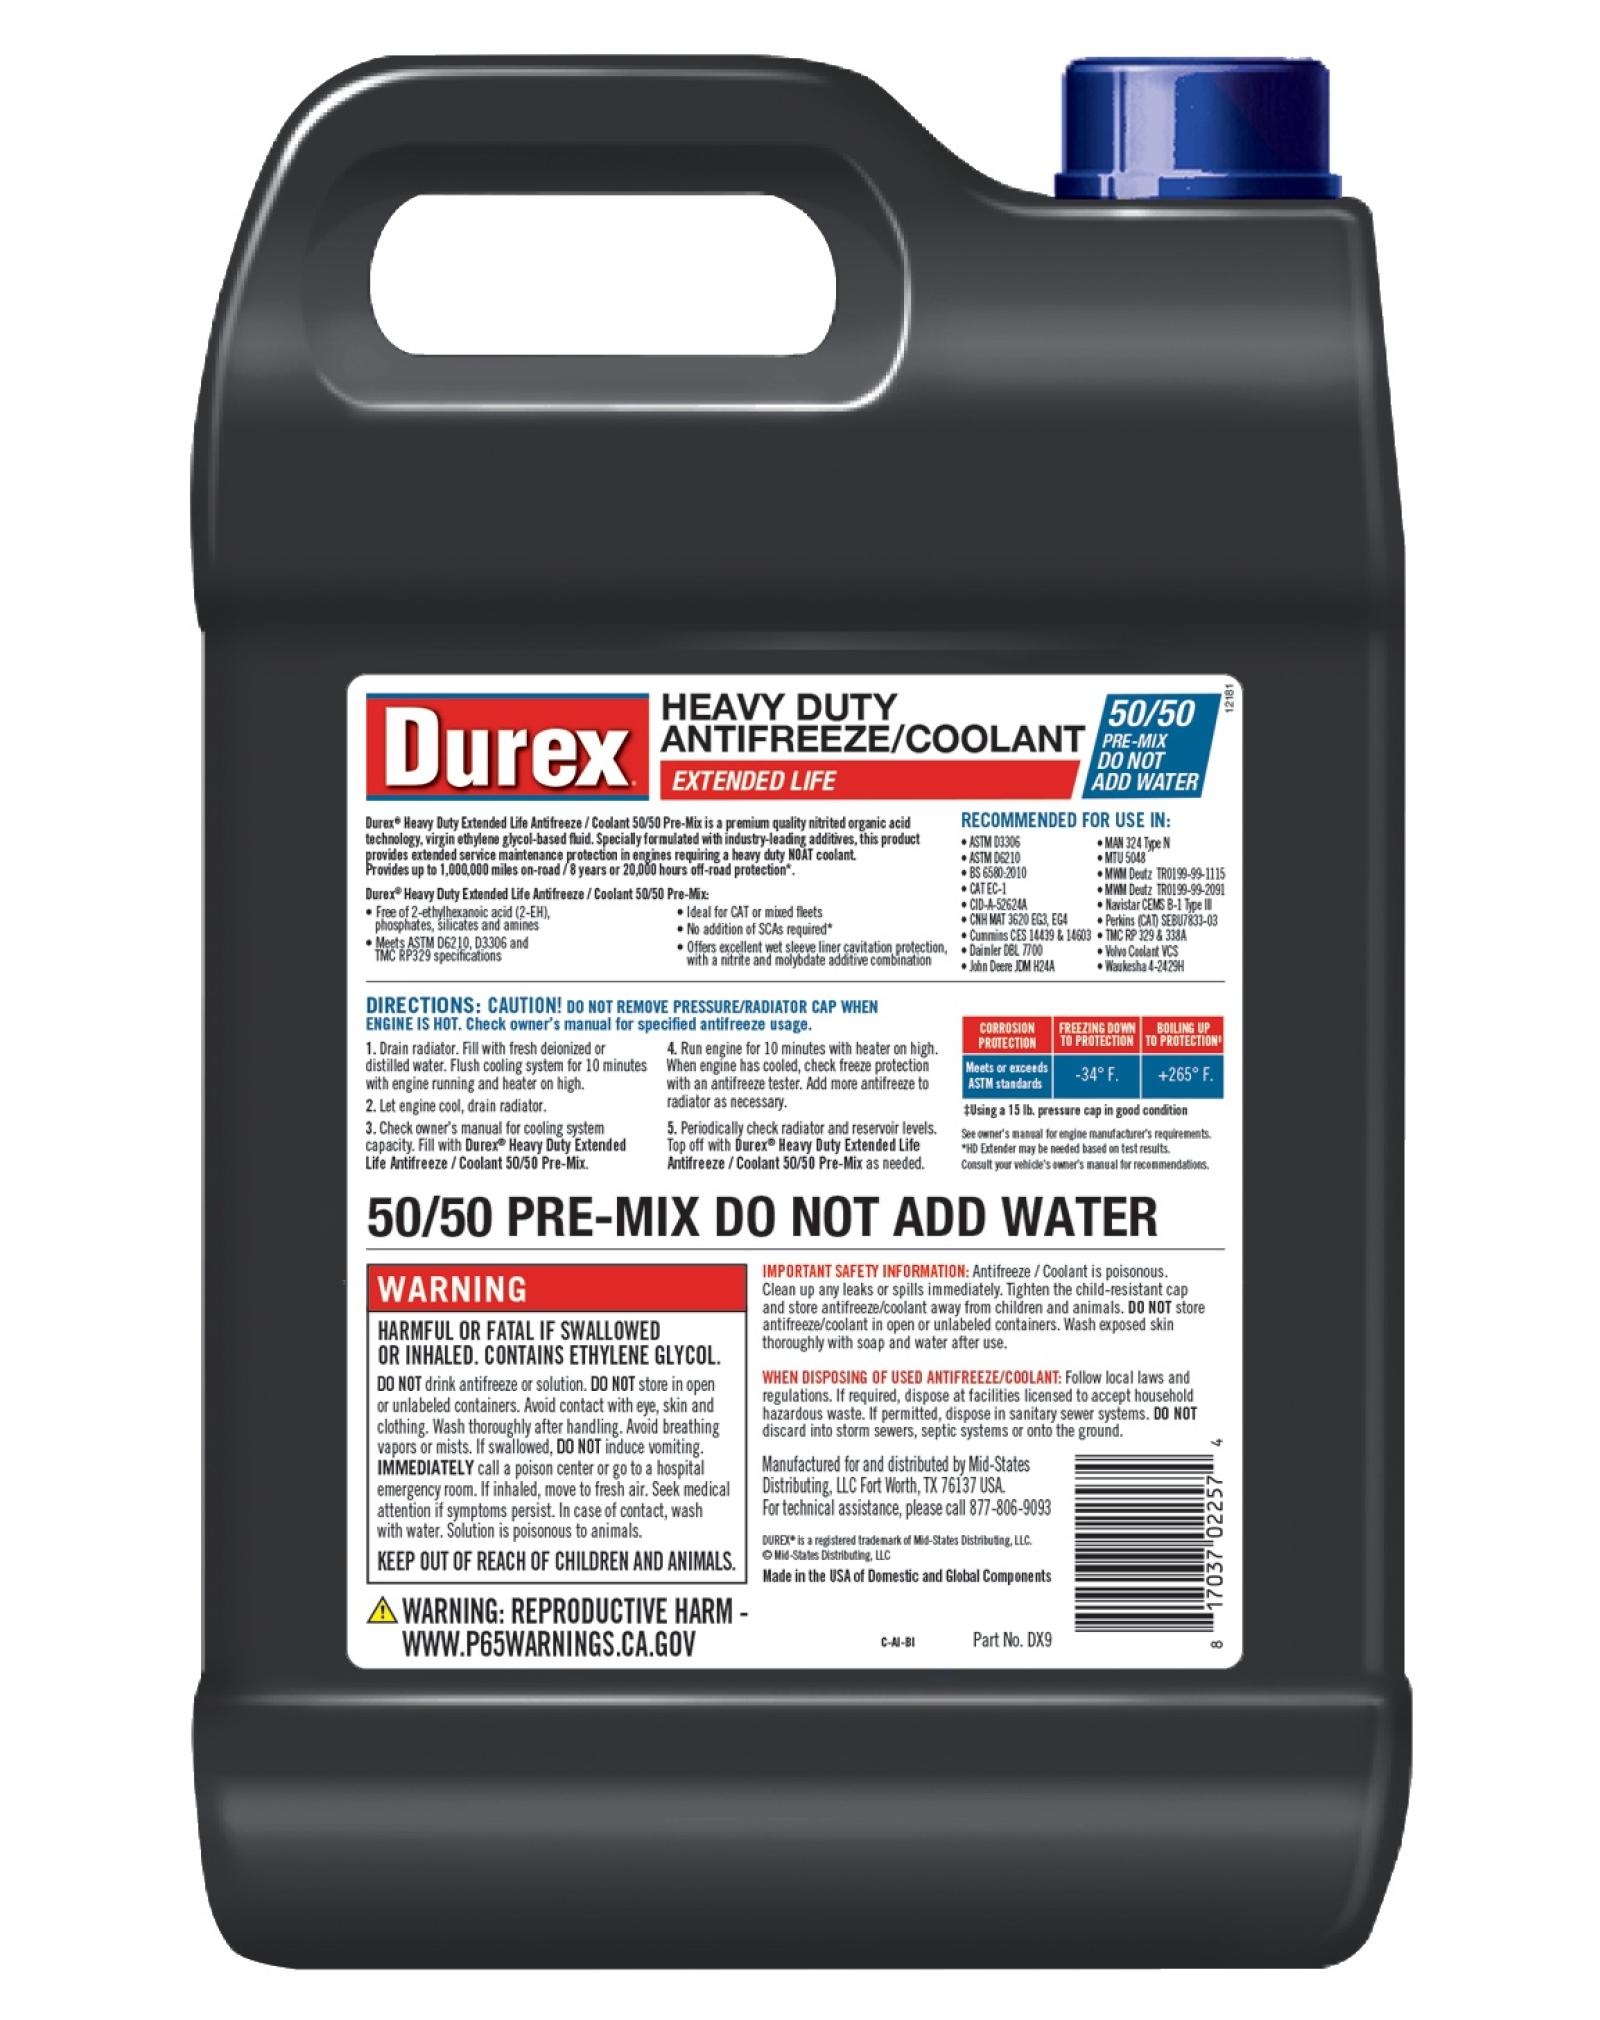 Durex® Heavy Duty Extended Life Formula 50/50 Antifreeze/Coolant